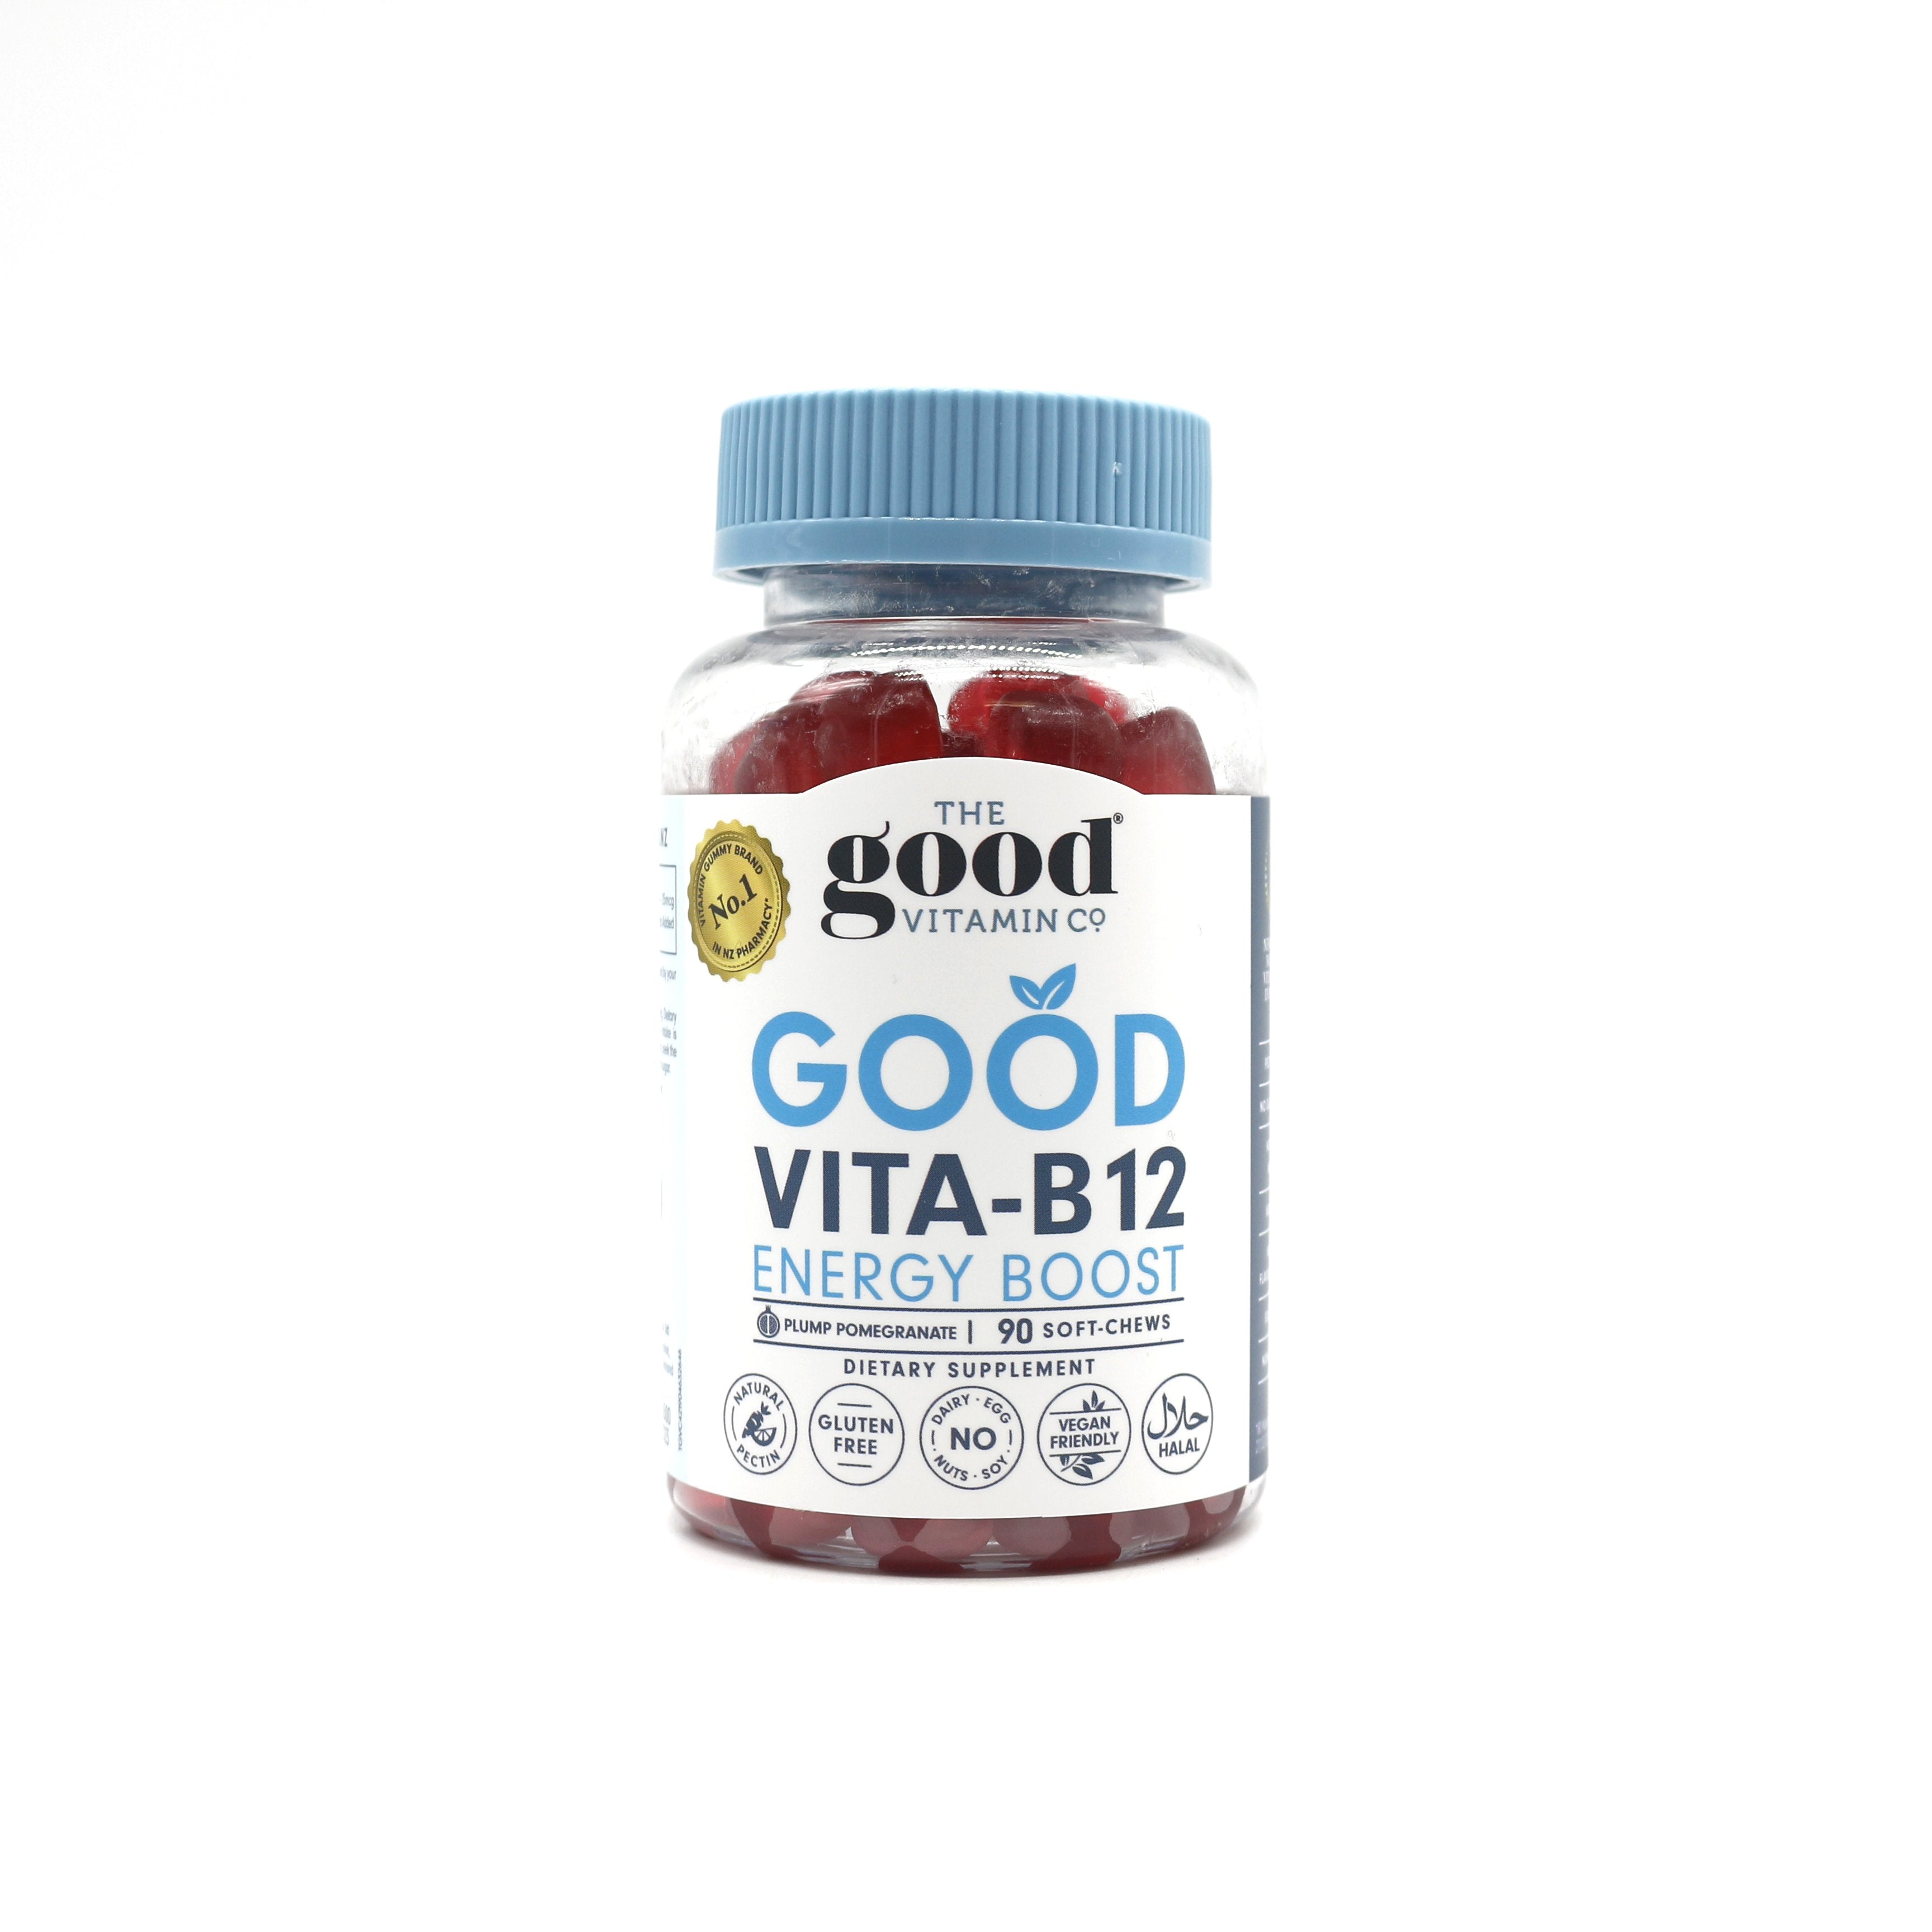 GOOD Vitamin VITA-B-12 Energy Boost 90 soft chews